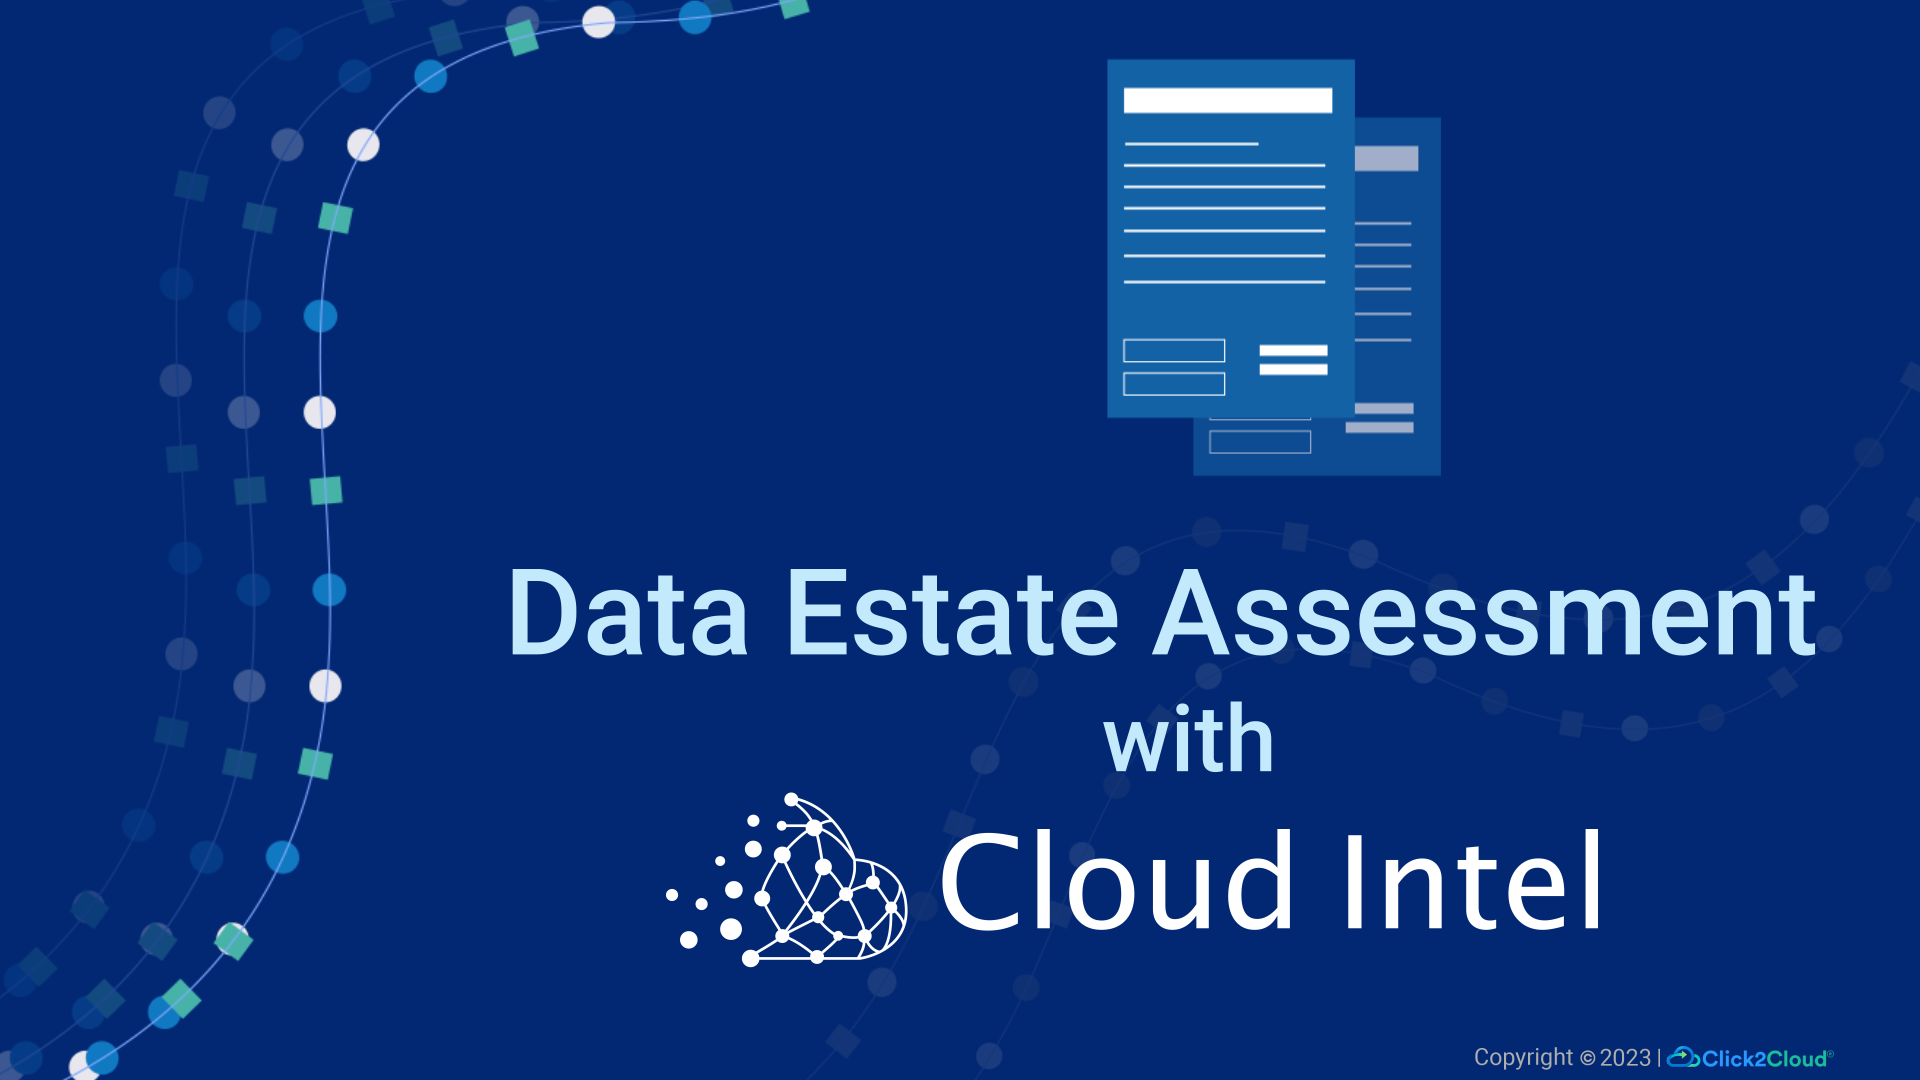 Click2cloud-Drive Data-Driven Business with Cloud Intel's Data Estate Assessment_Video